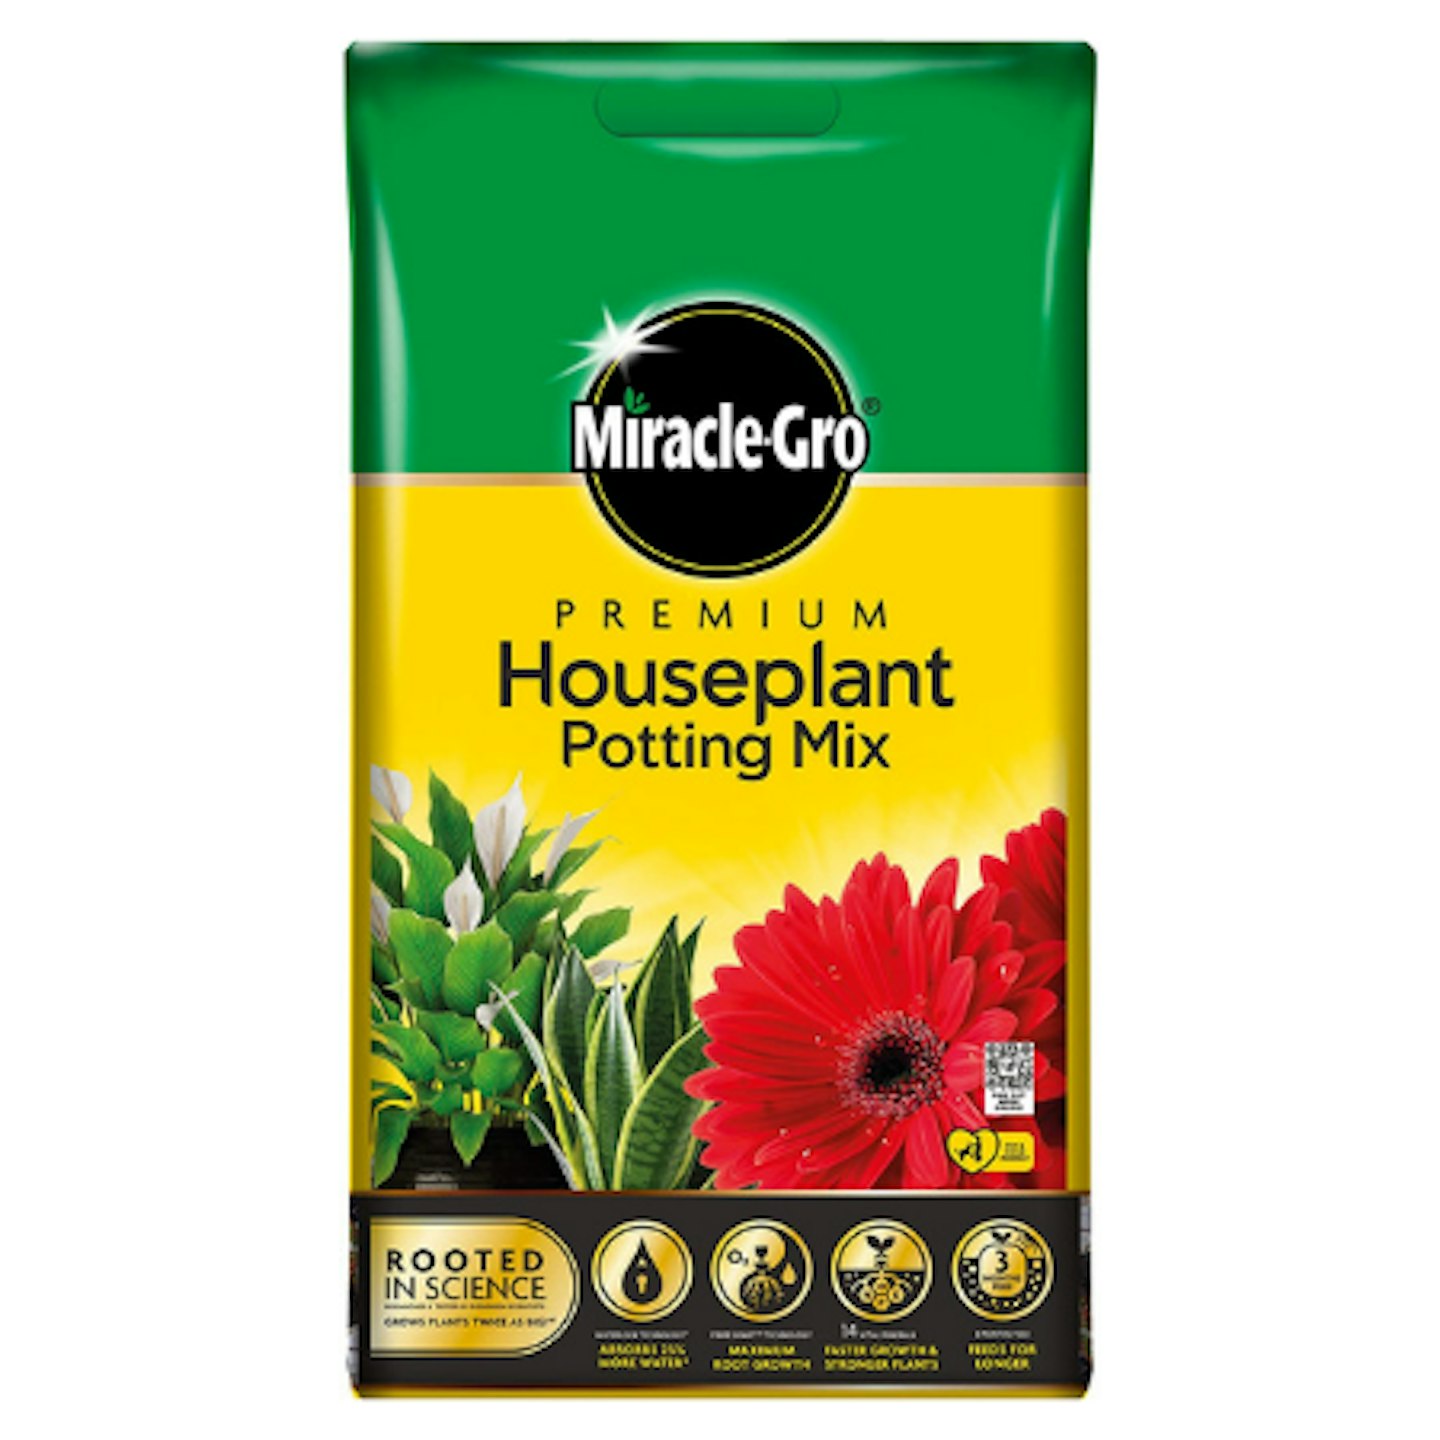 Miracle-Gro Premium Houseplant Potting Mix compost